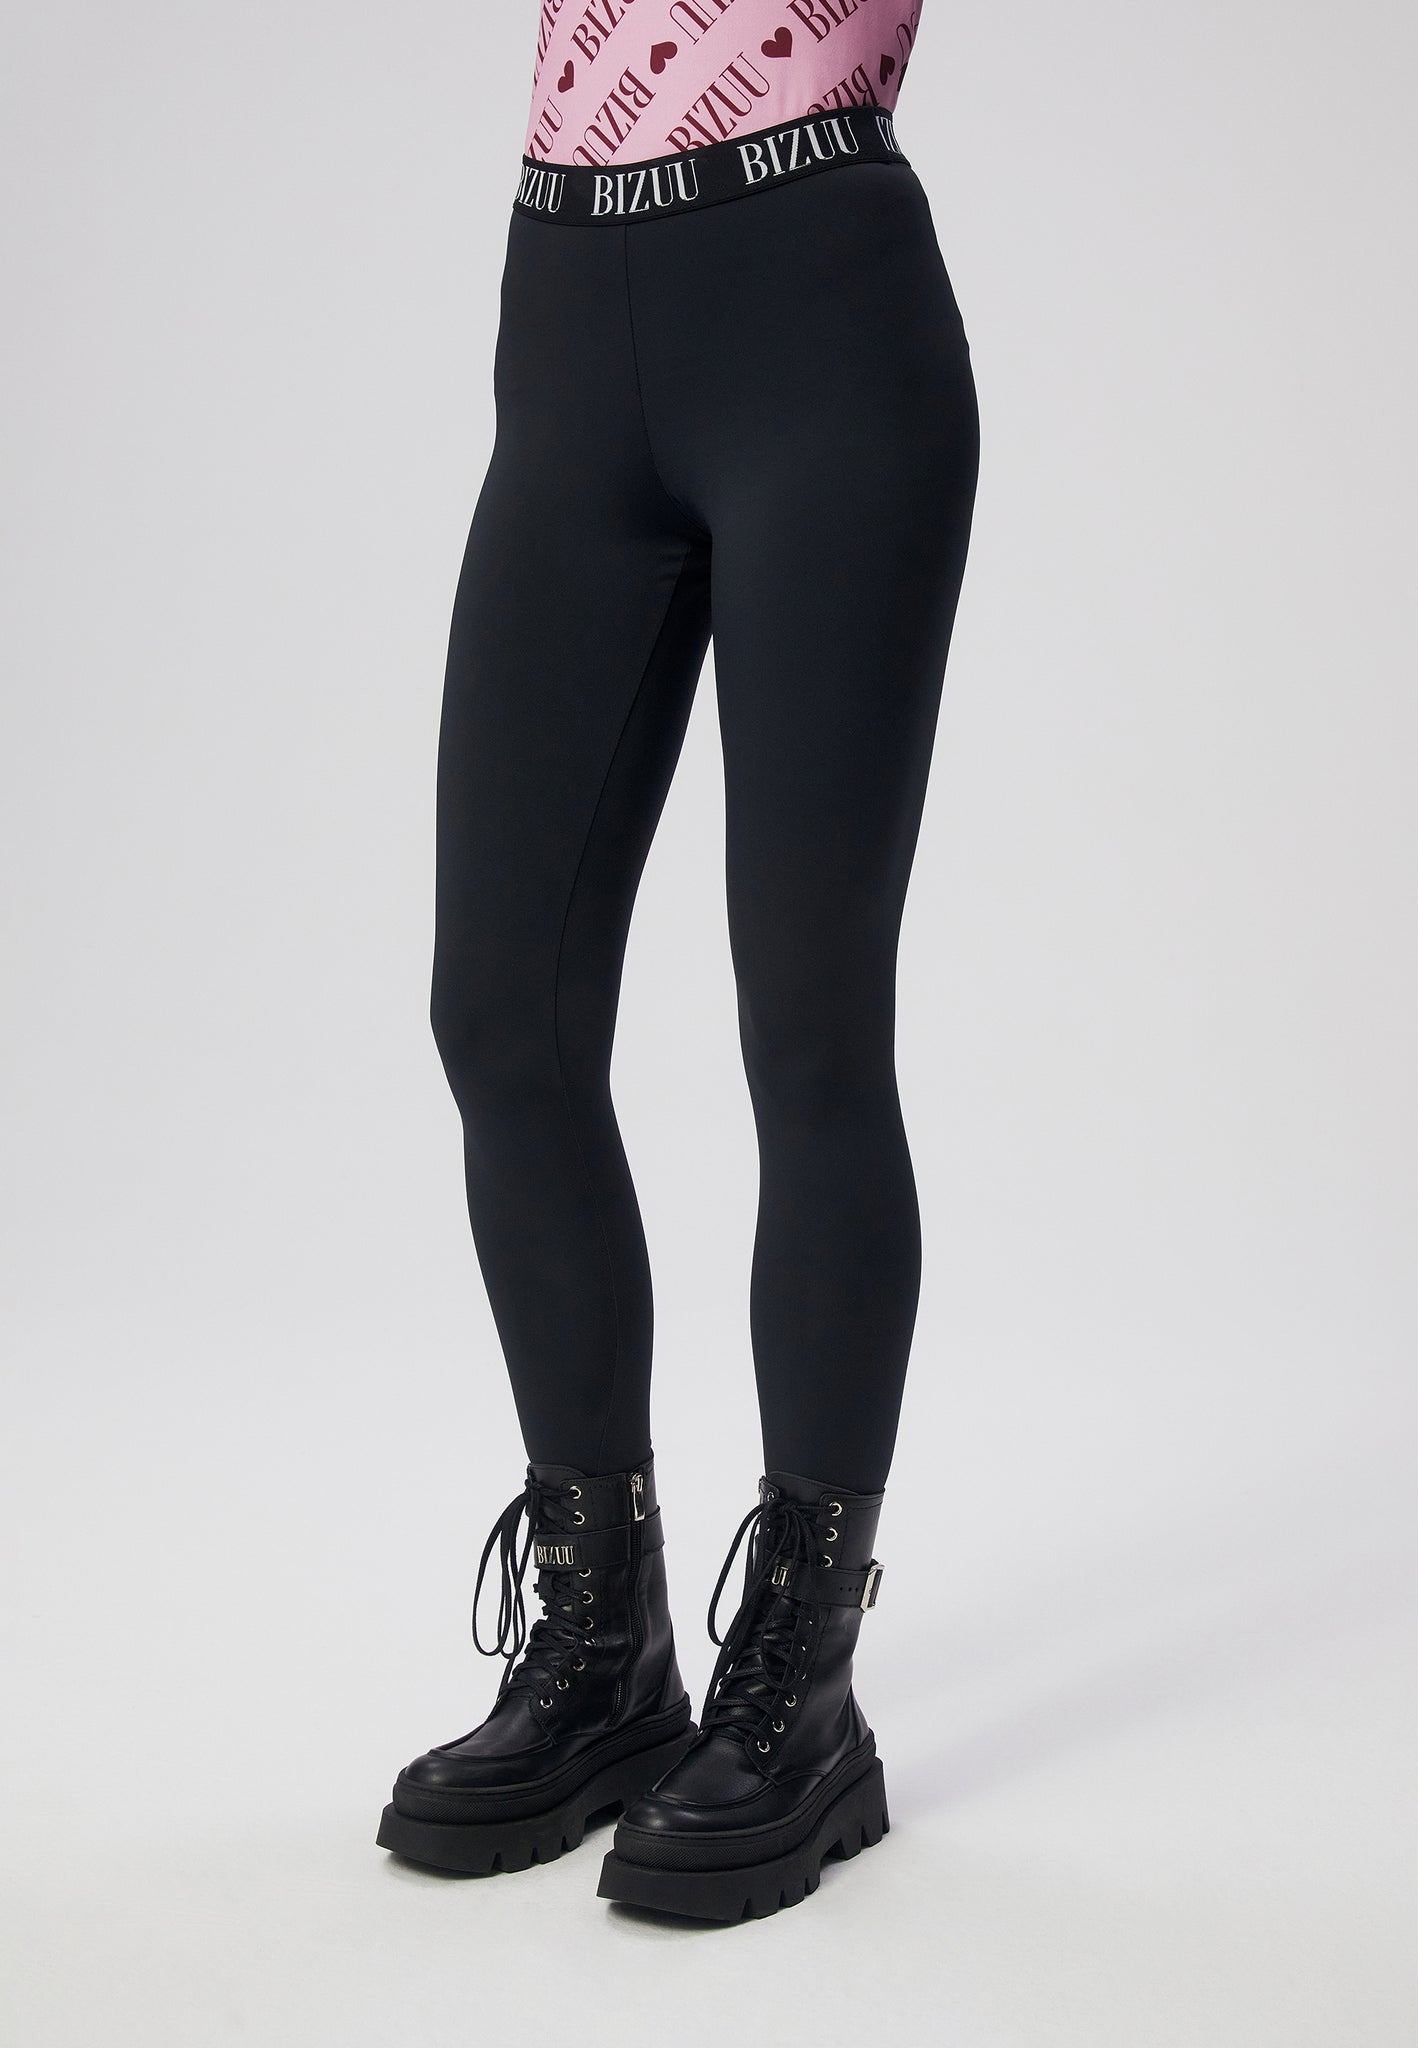 ADRIEN slim fit leggings with elastic waistband, black – Bizuu